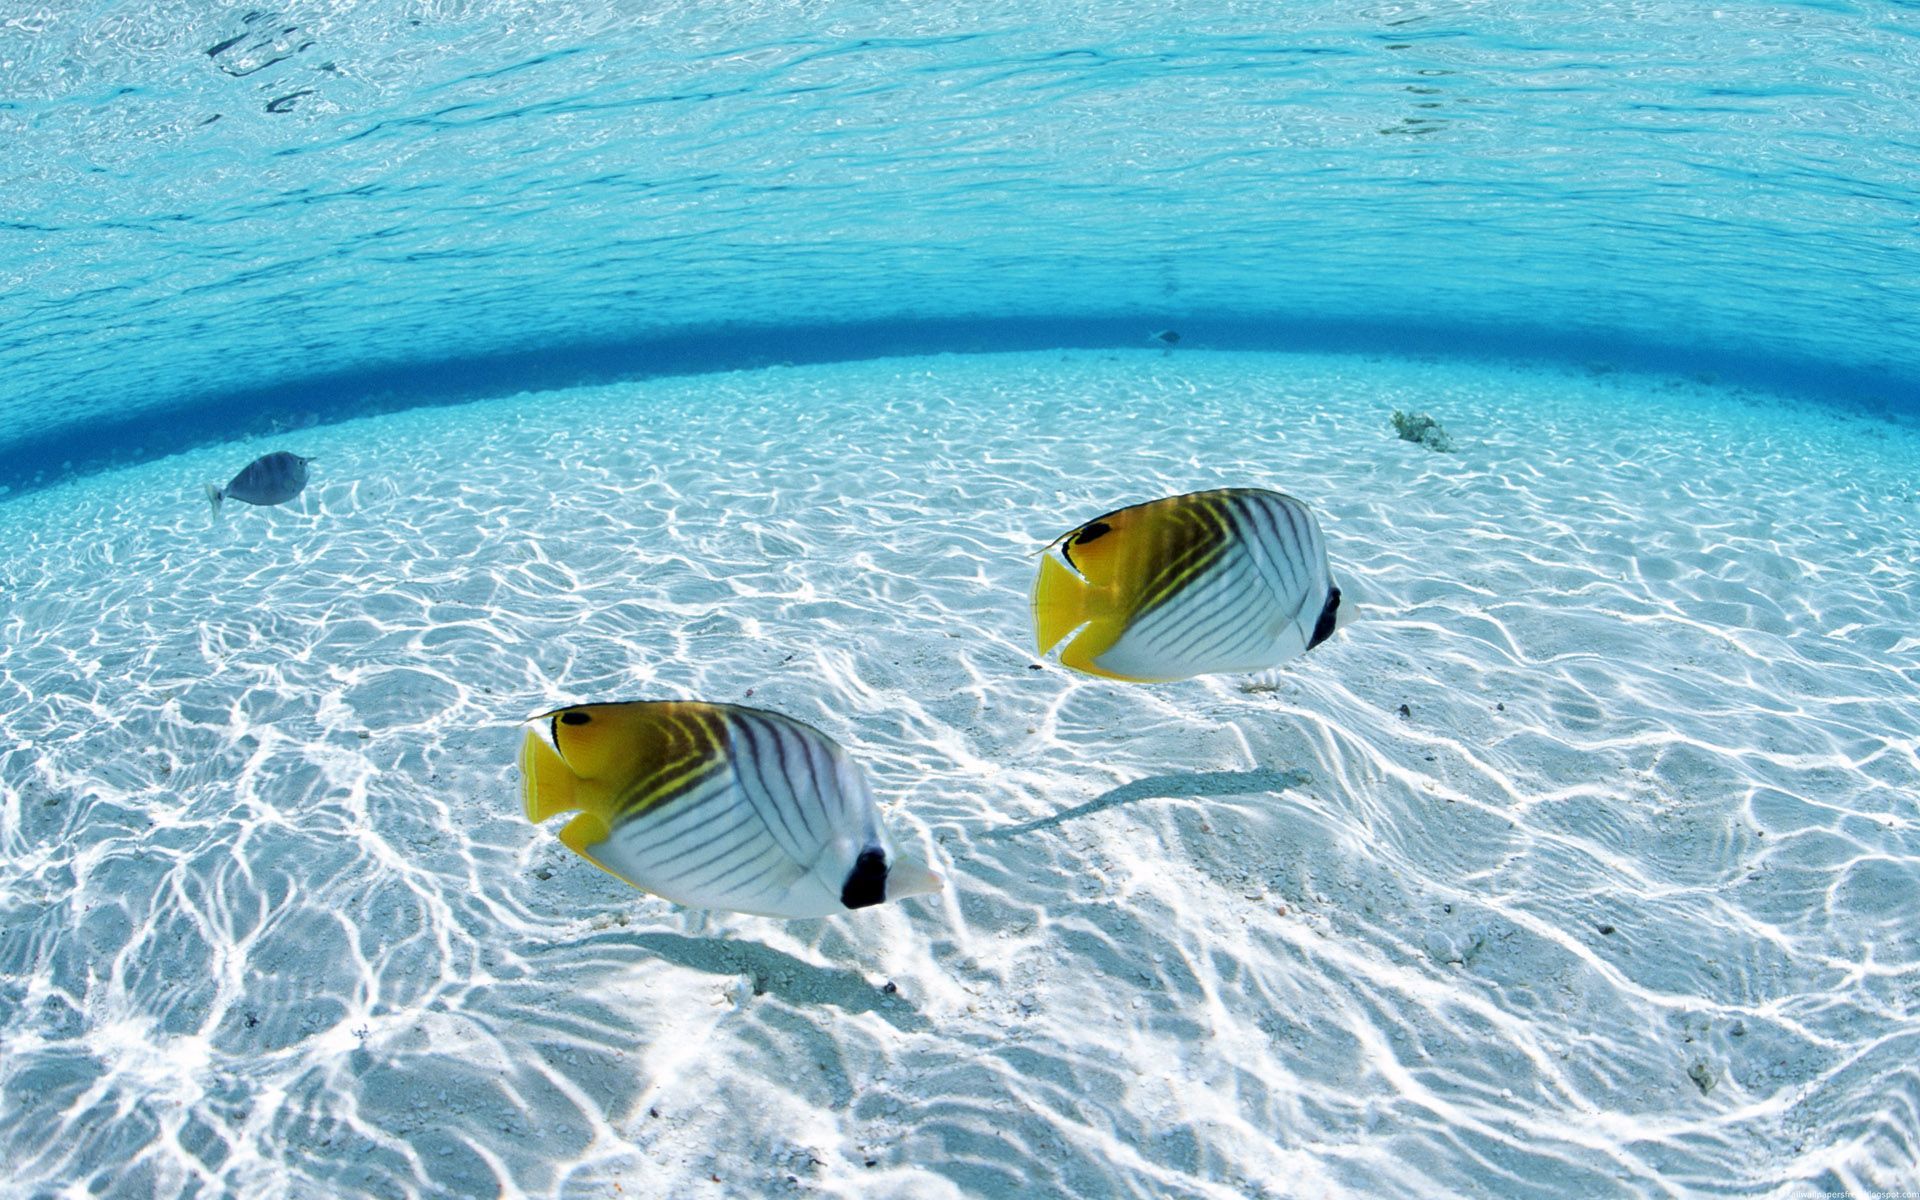 Underwater Ocean Screensaver Wallpapers